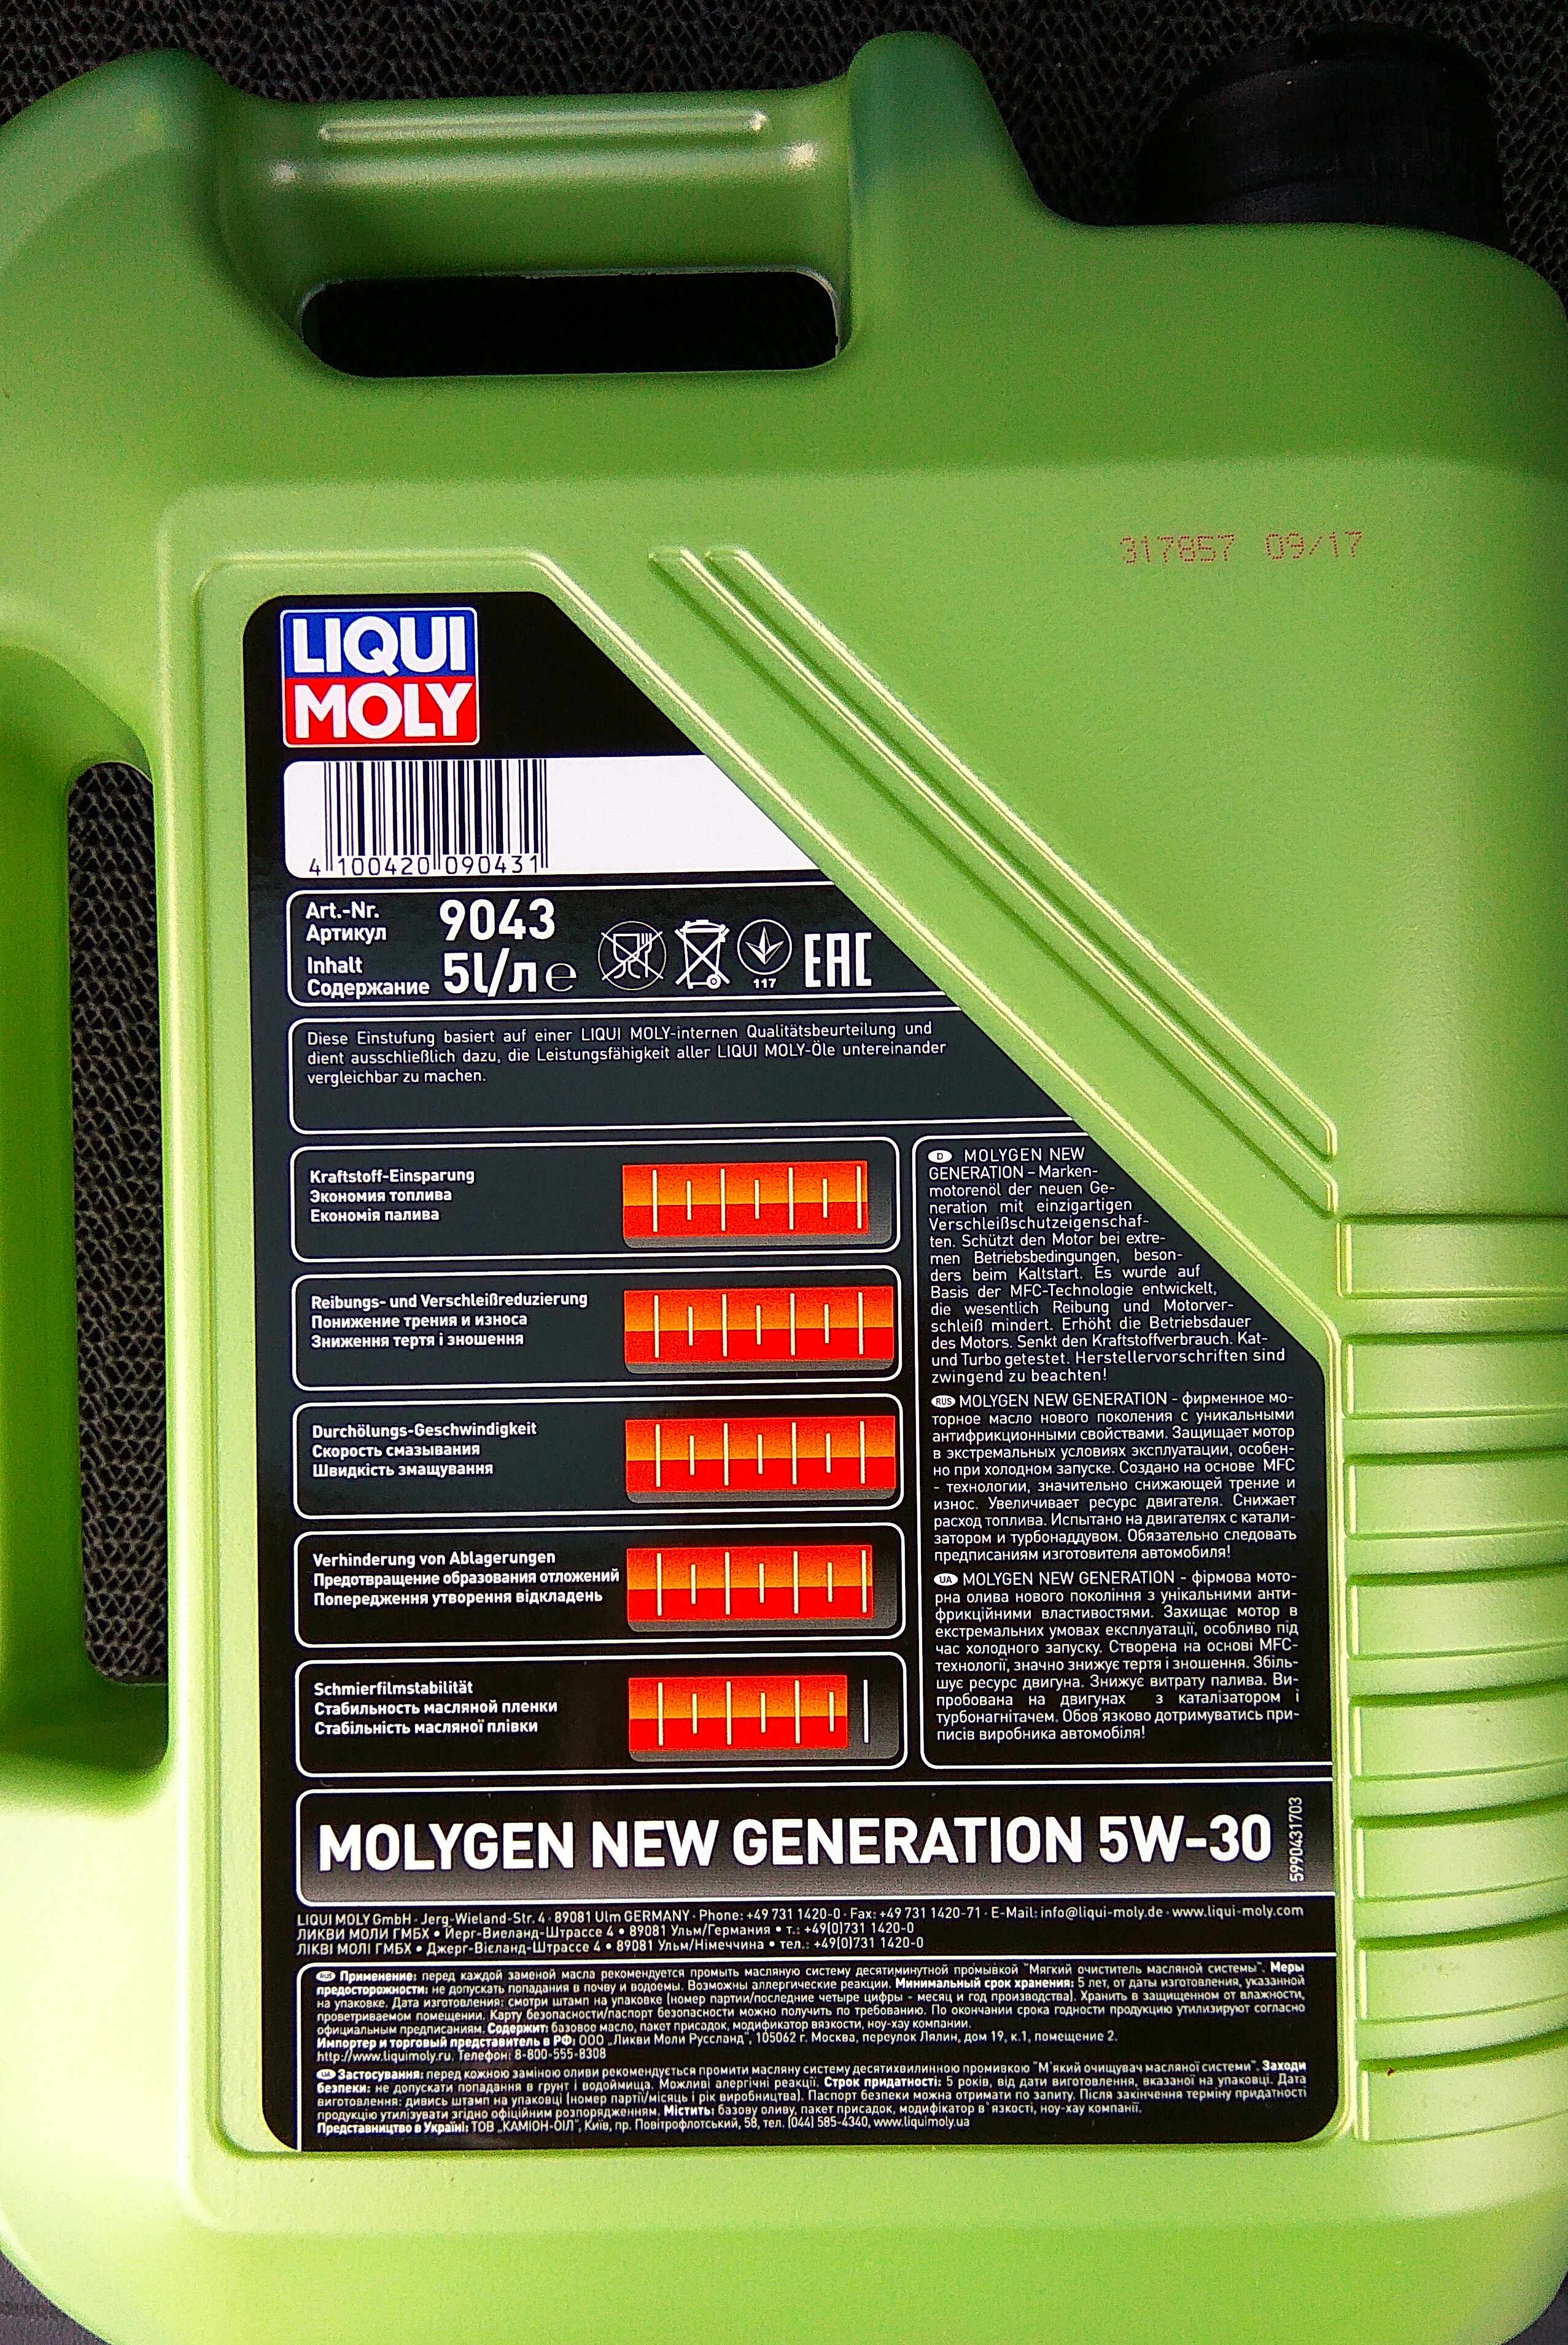 Масло ликви моли 5w40 отзывы. Molygen New Generation 5w-40. Масло Ликви моли молиген 5w40. Моторное масло Liqui Moly Molygen New Generation 5w-40. Liqui Moly 5w40 Molygen 4л артикул.